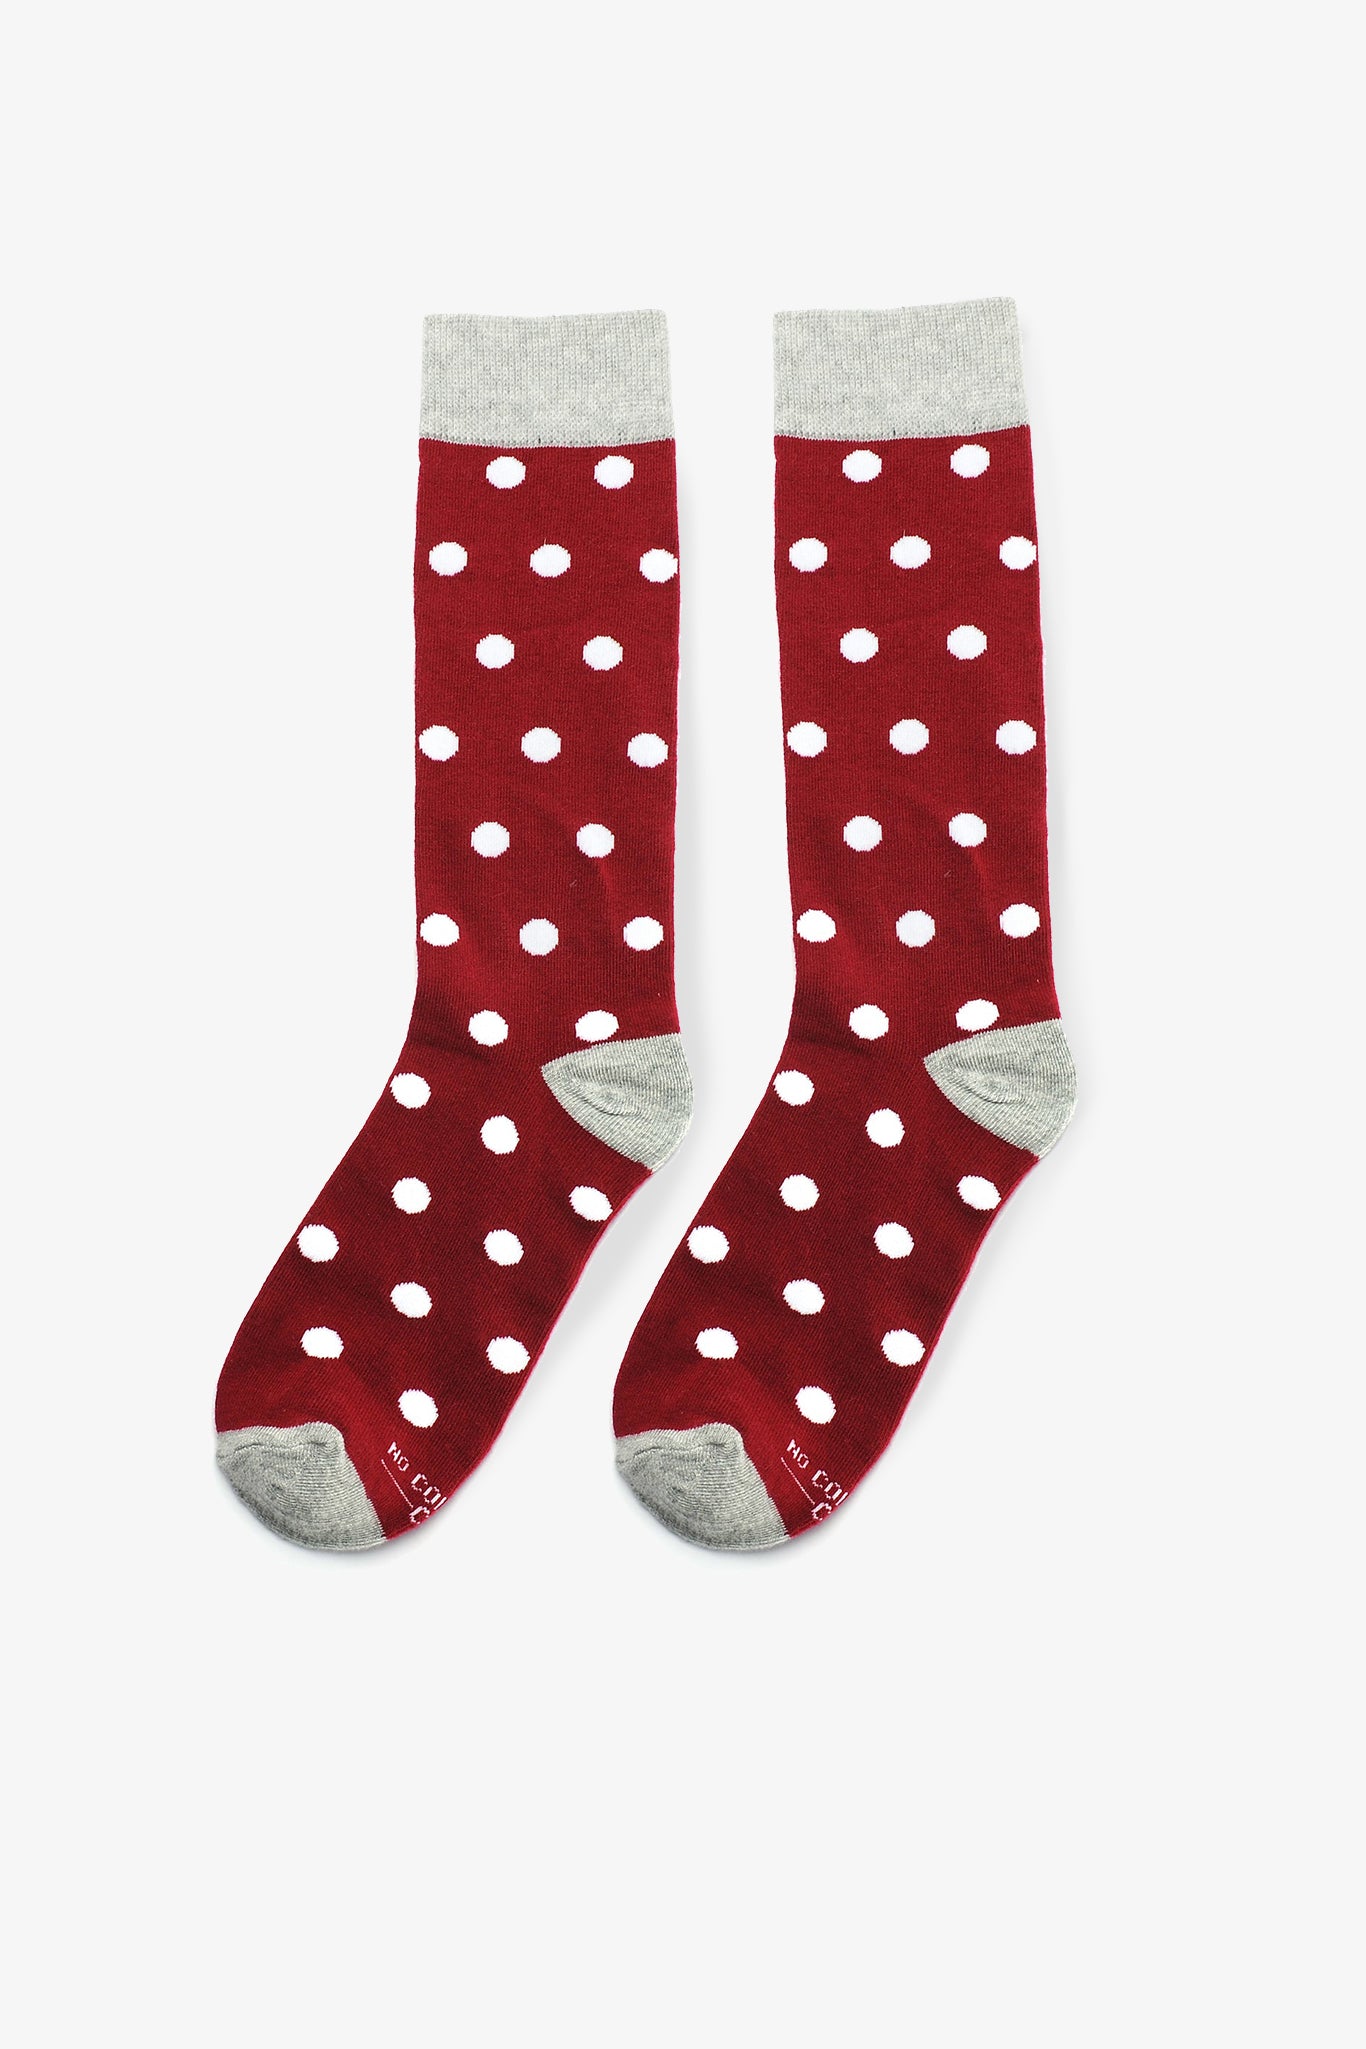 Polka Dot Groomsmen Socks By No Cold Feet - Burgundy